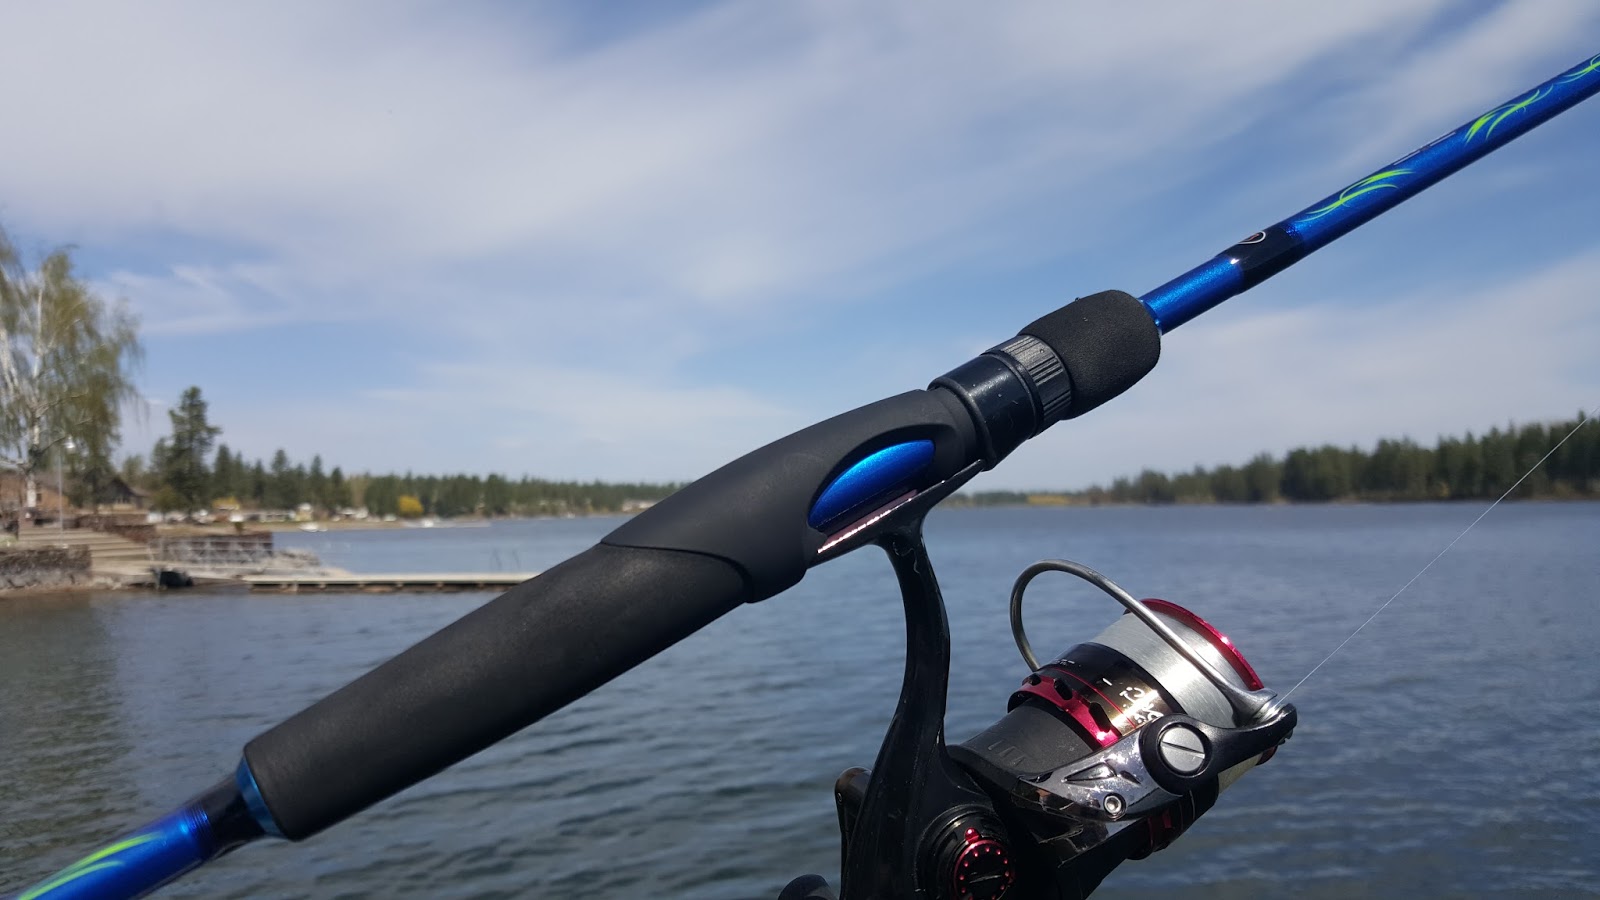 T Brinks Fishing: Field & Stream Tec-Spec Elite Spinning Rod Review